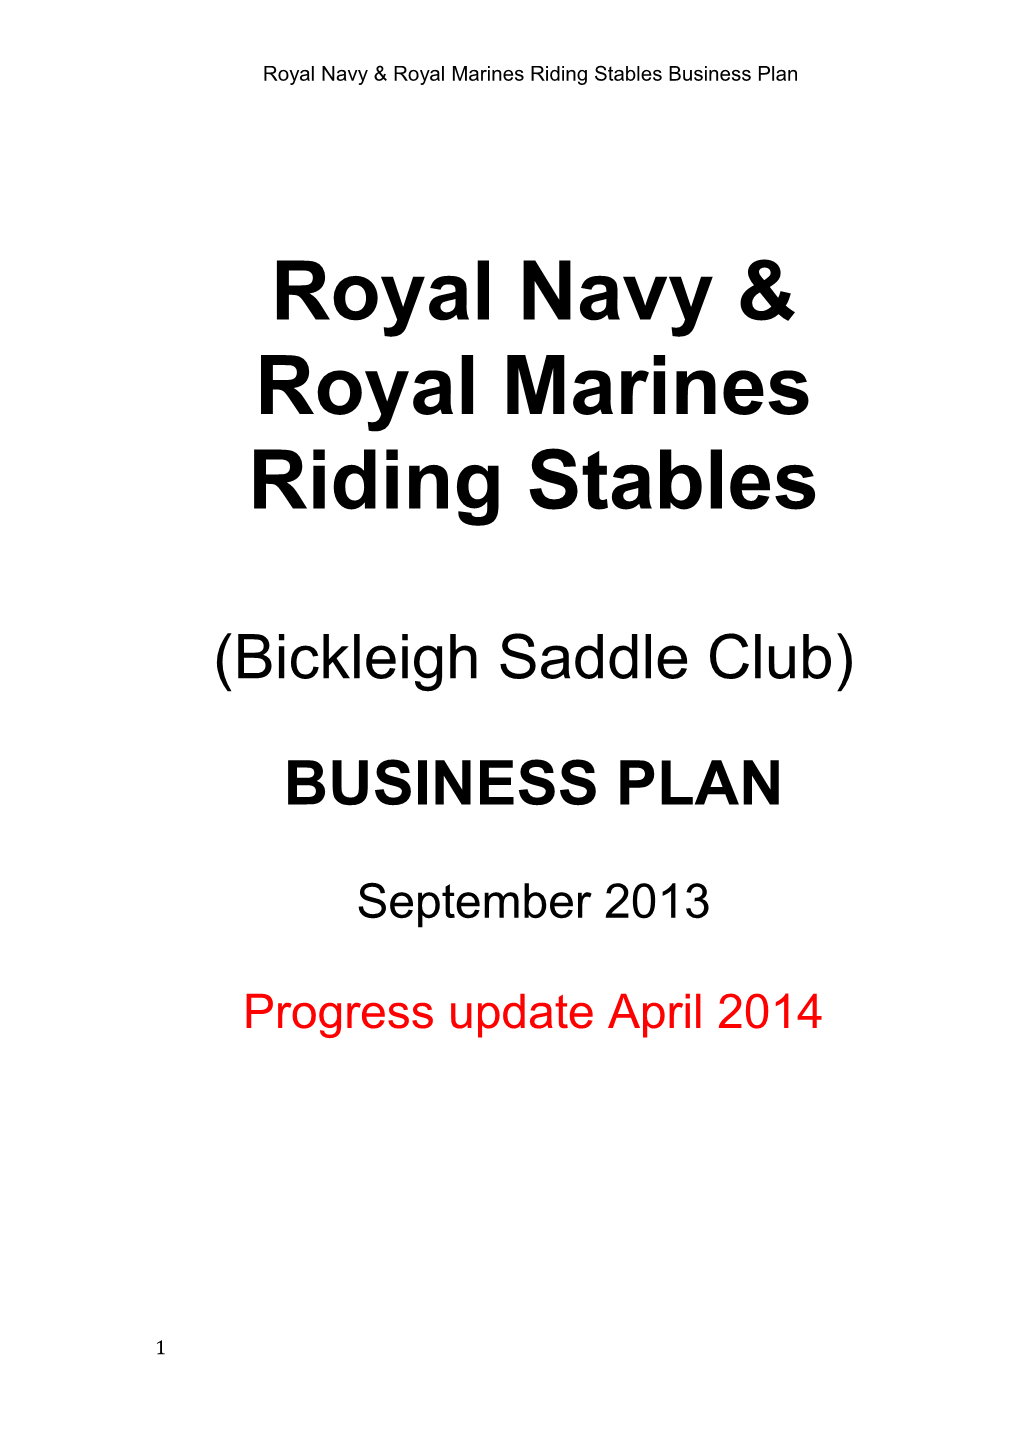 Royal Navy & Royal Marines Riding Stables Business Plan